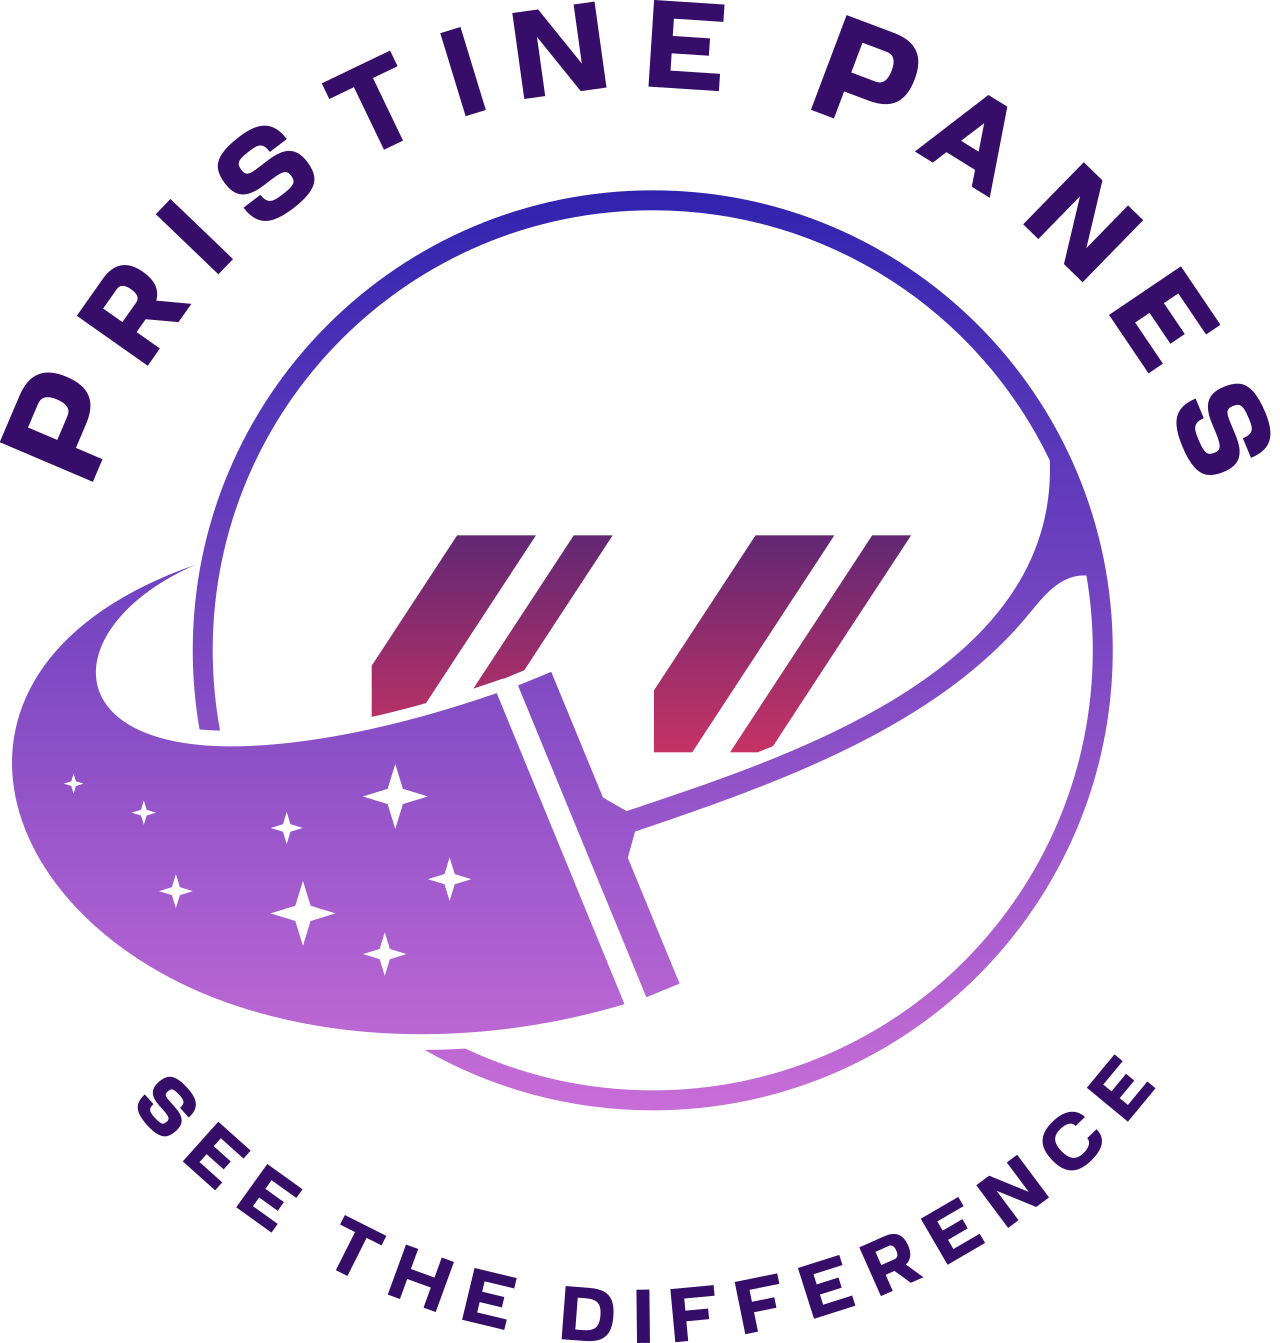 Pristine Panes's logo